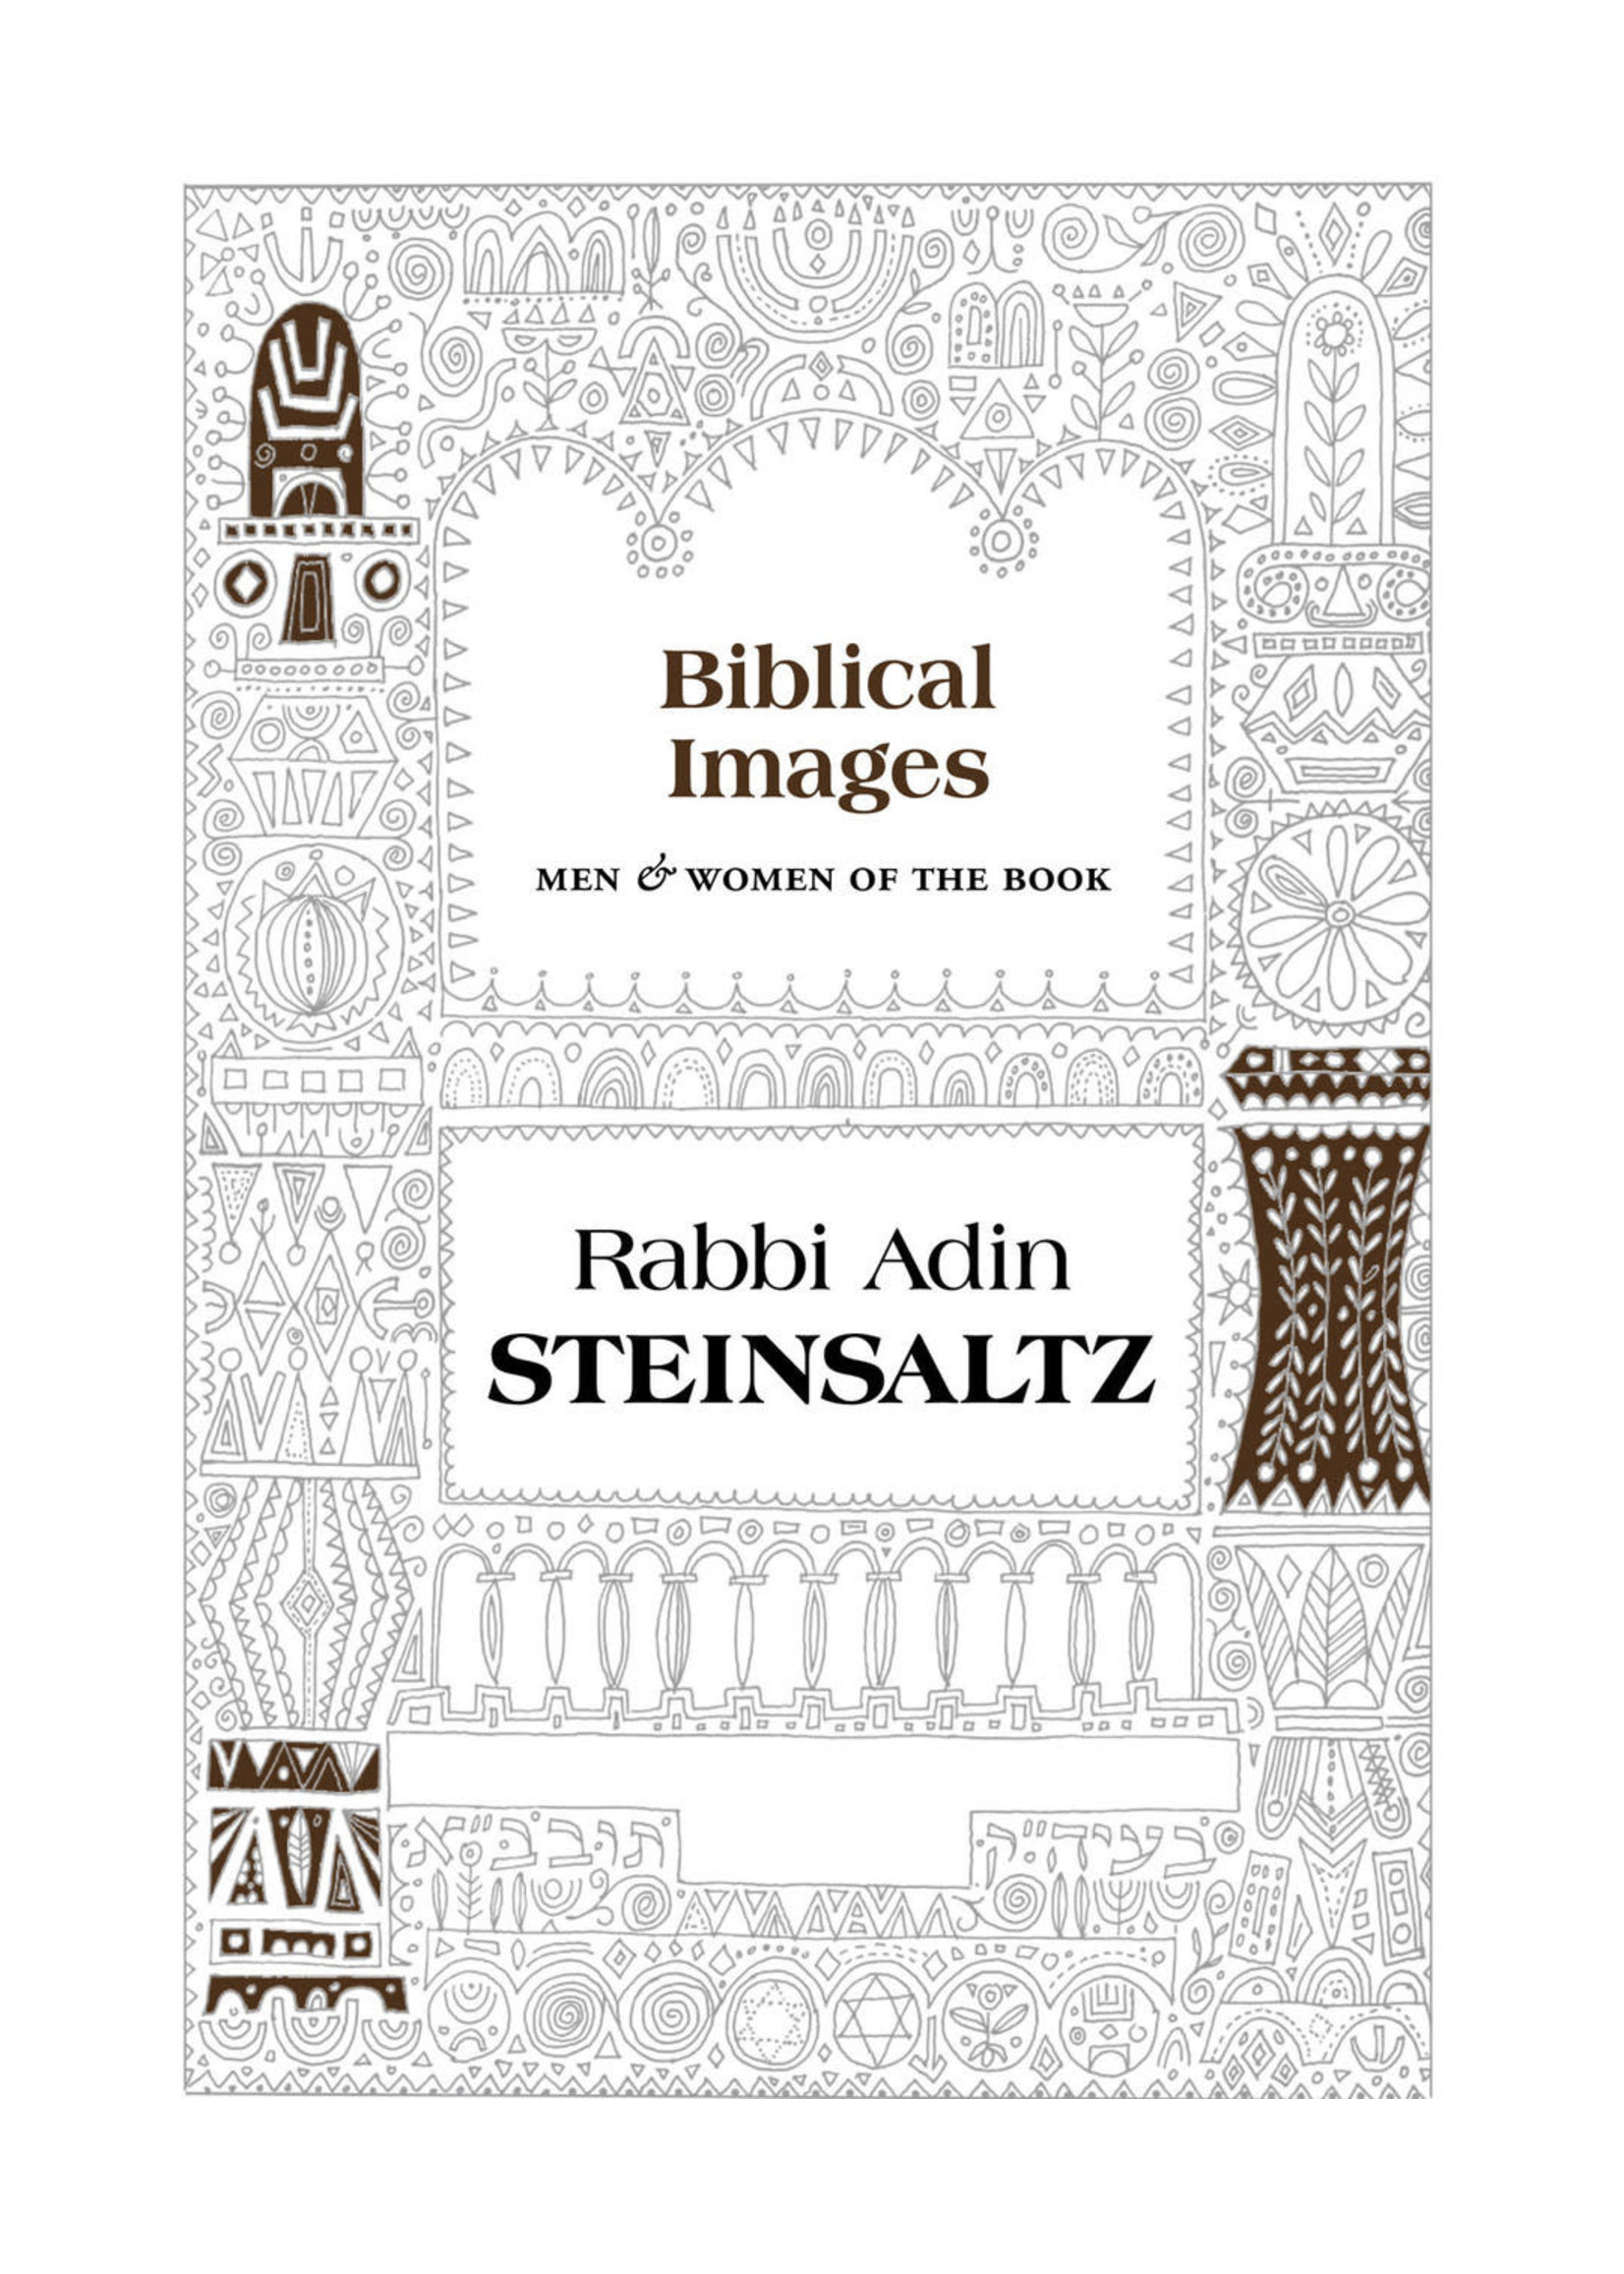 BIBLICAL IMAGES - STEINSALTZ